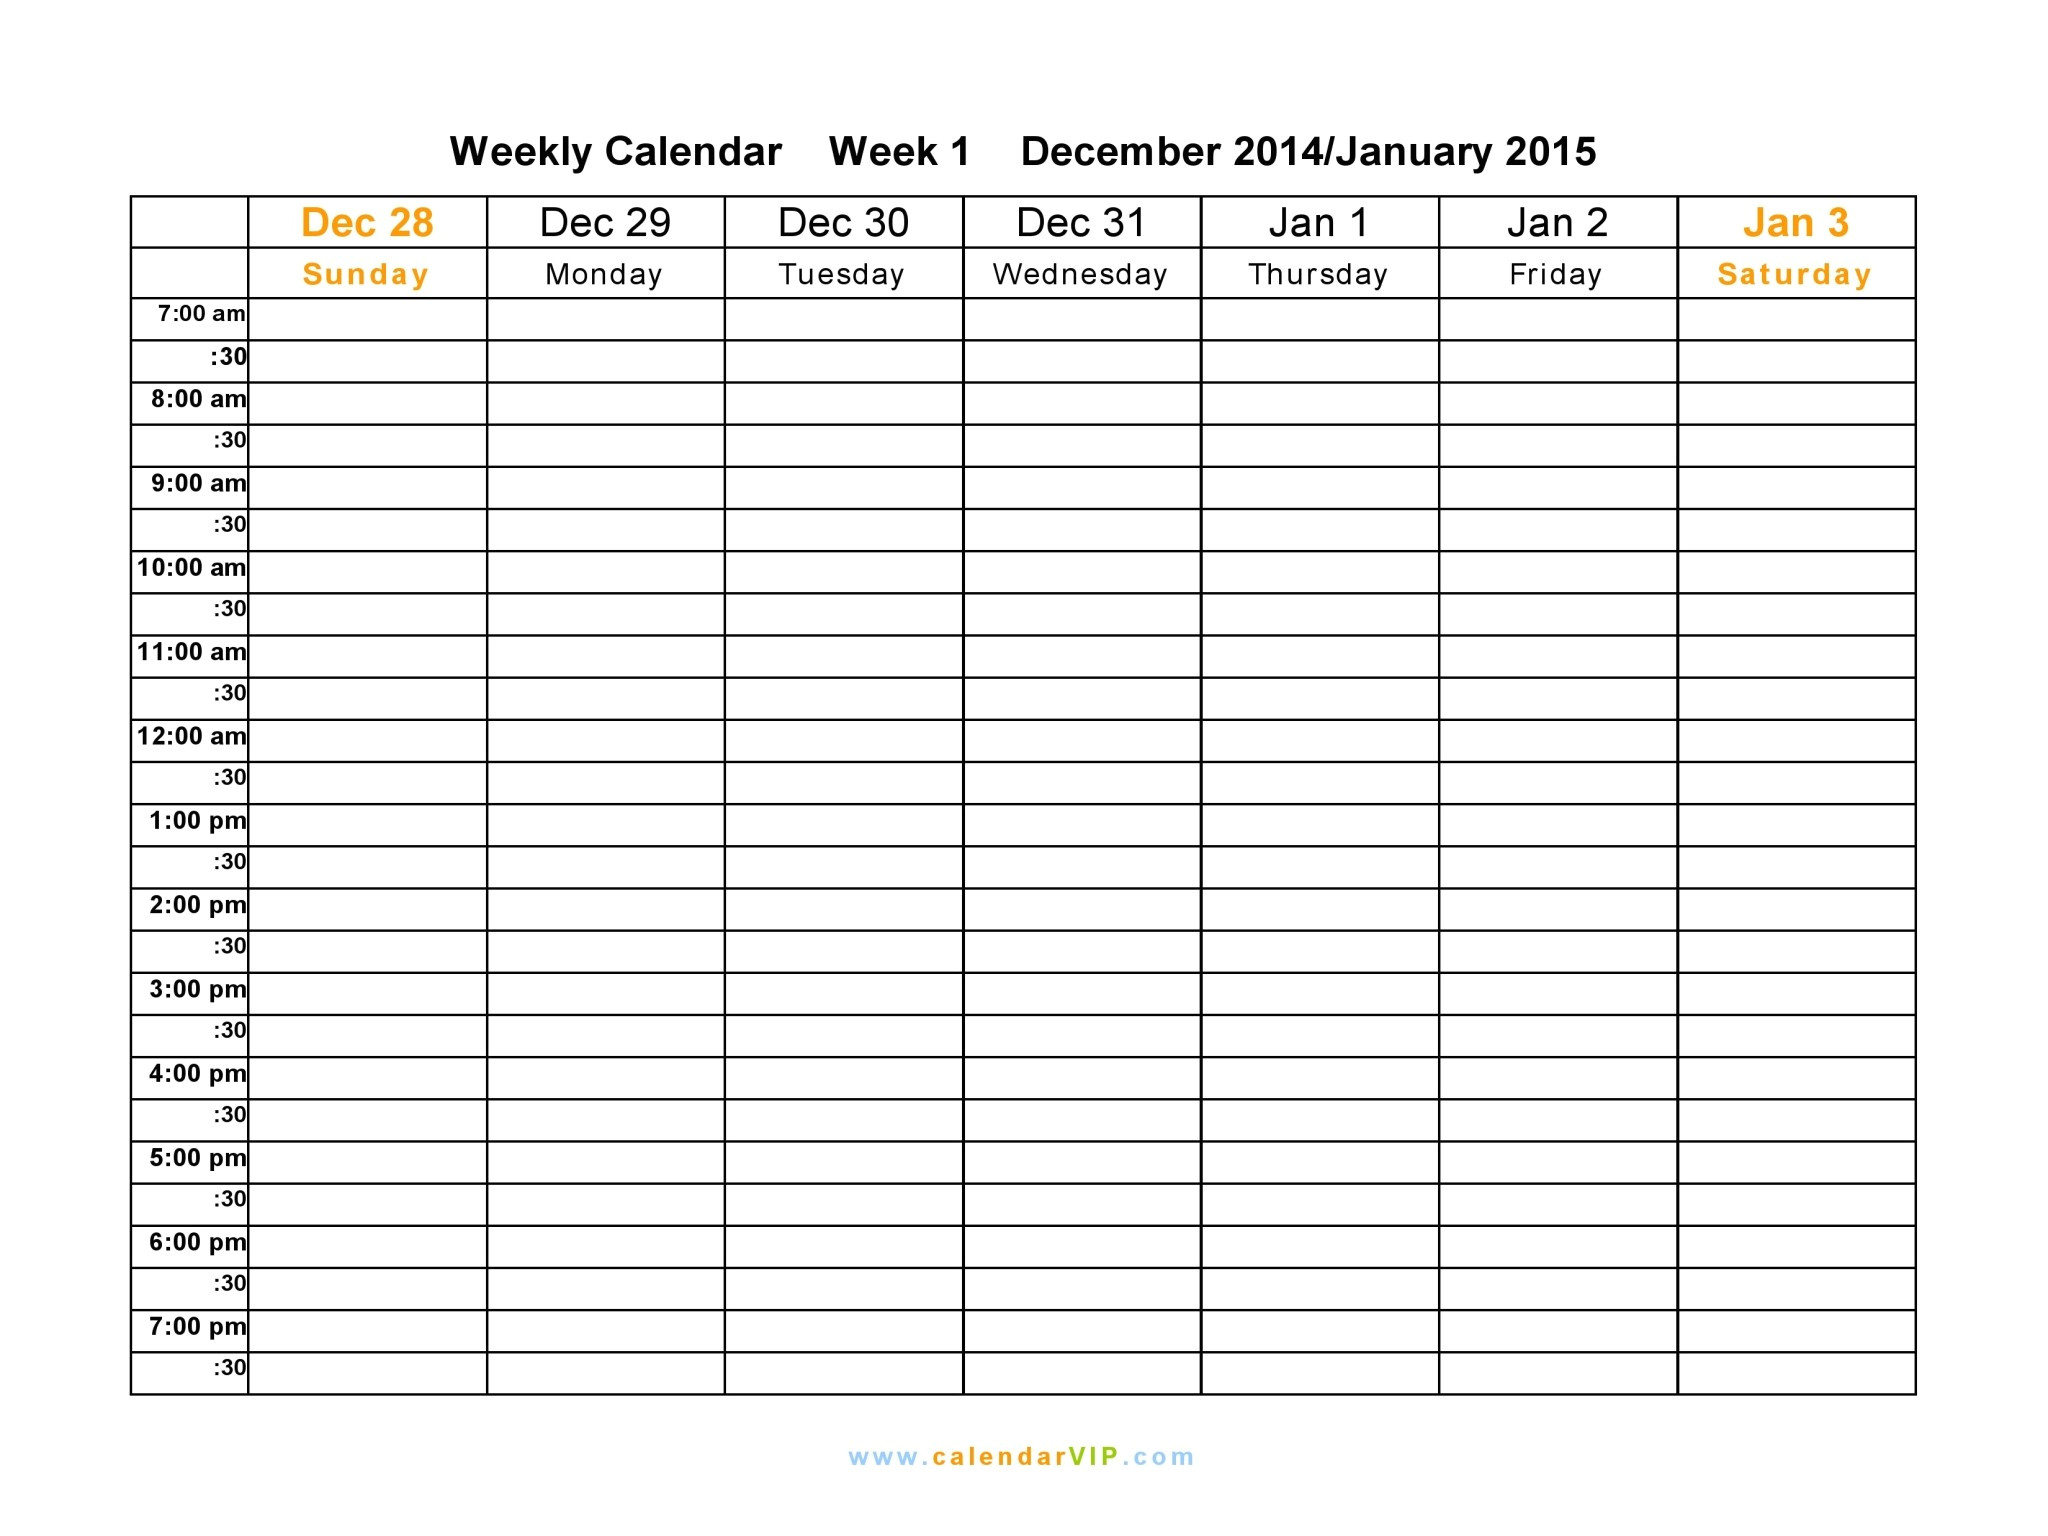 scheduling calendar template